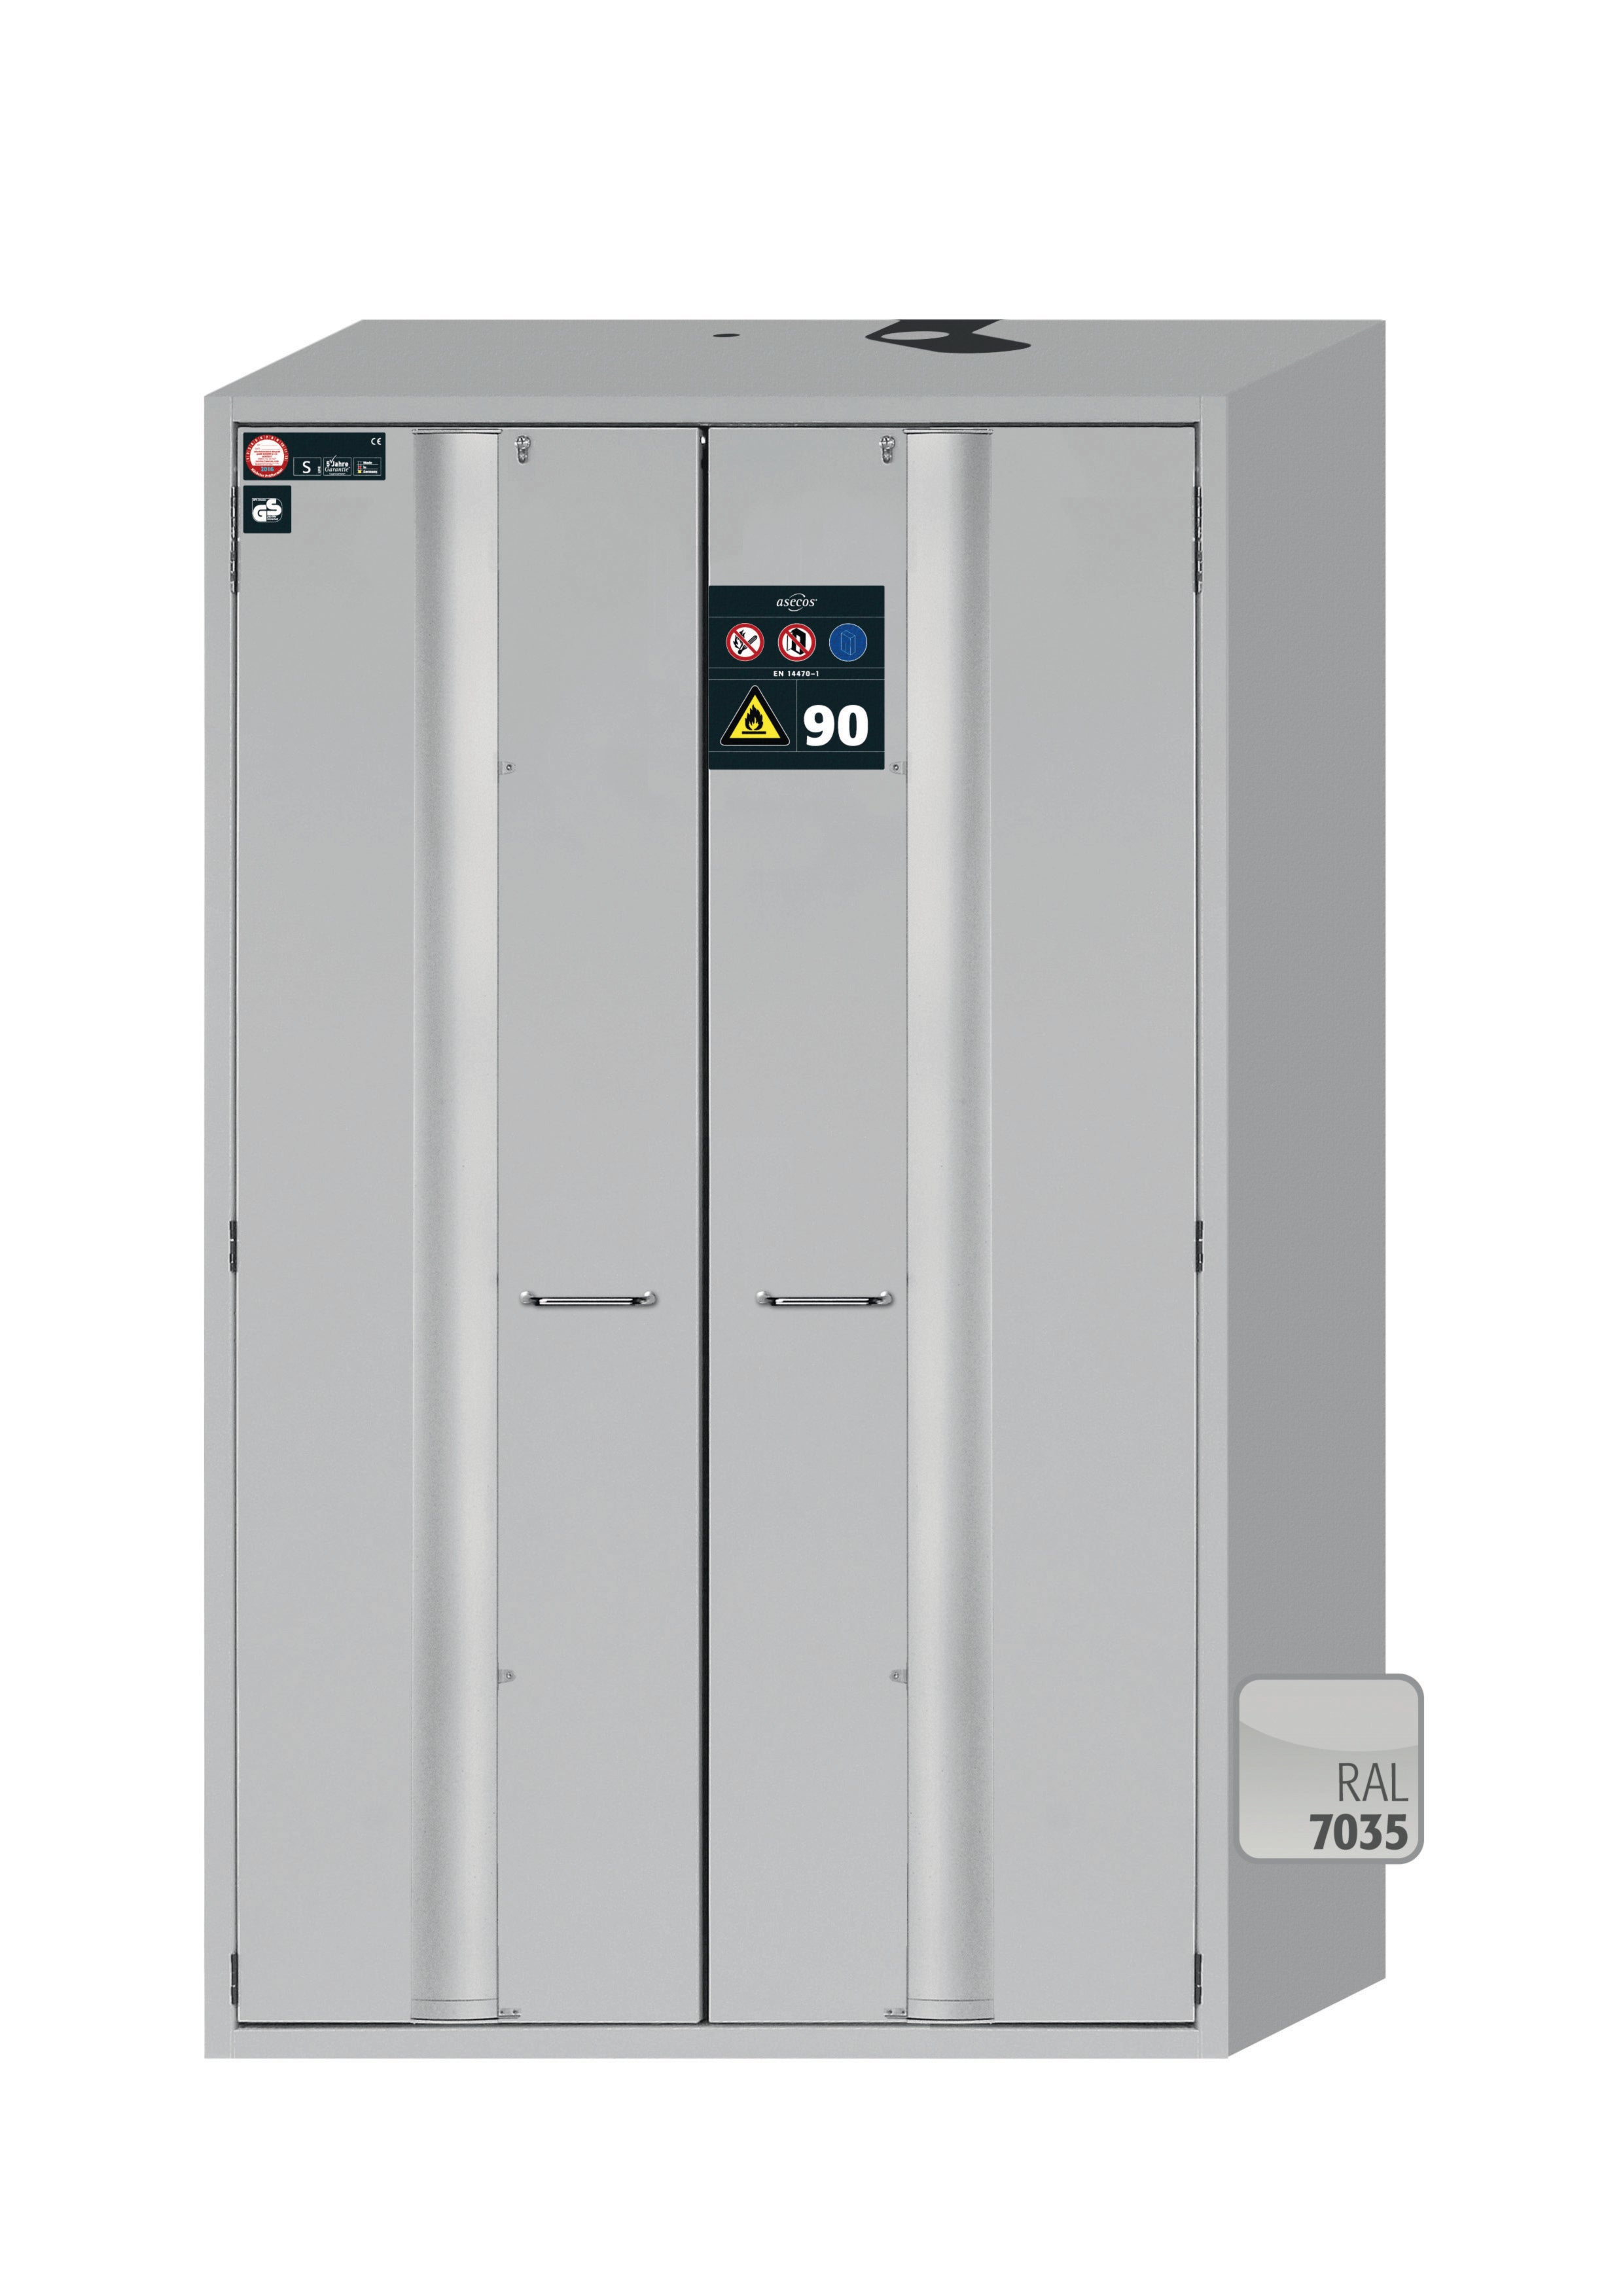 Type 90 safety storage cabinet S-PHOENIX-90 model S90.196.120.FDAS in light grey RAL 7035 with 2x shelf standard (stainless steel 1.4301),